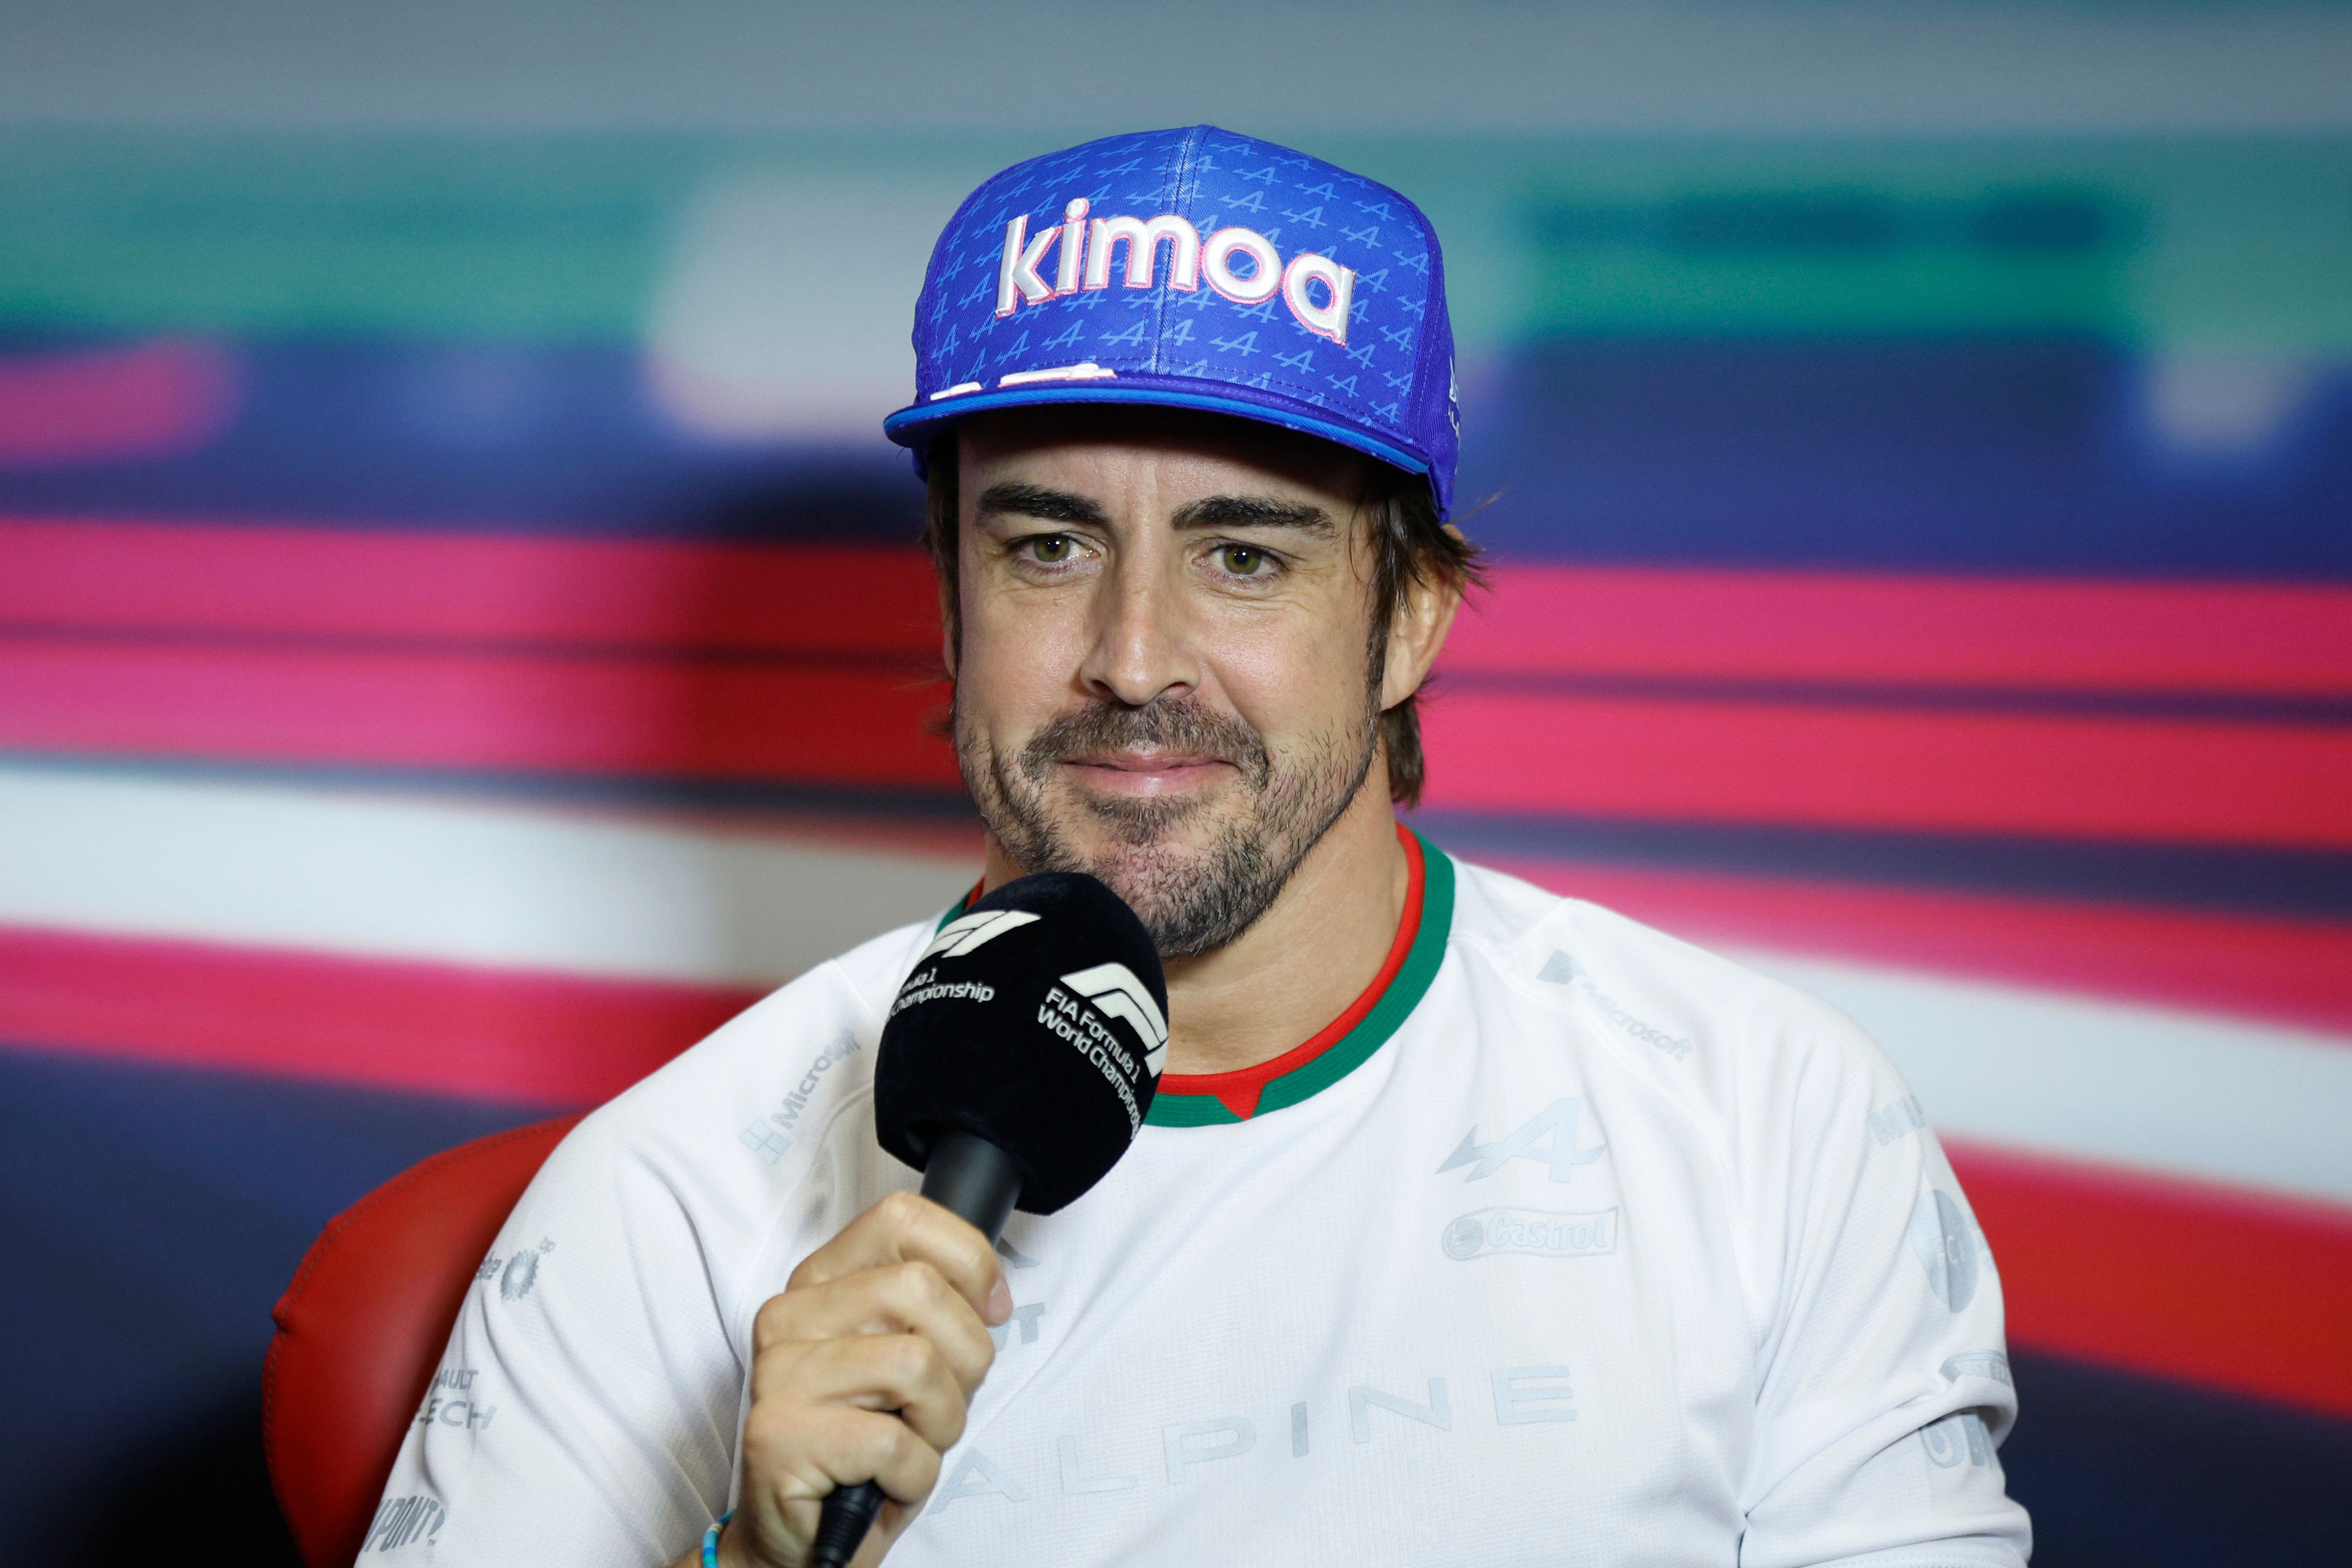 Fernando Alonso talks to the press in Mexico